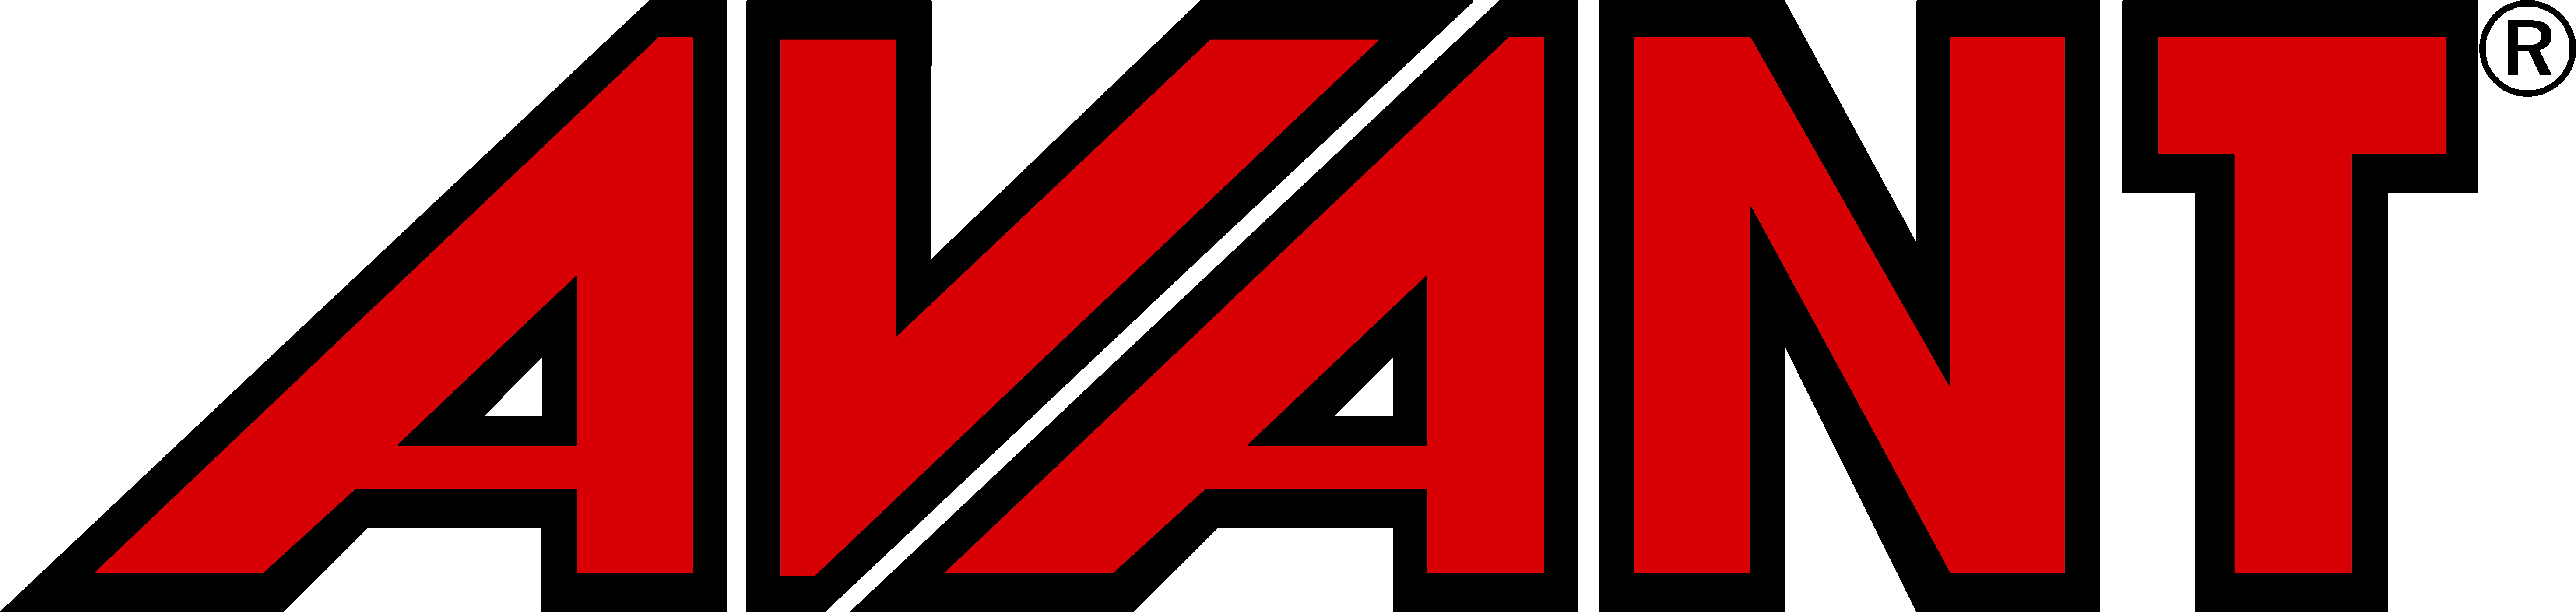 avant_logo (1).jpg